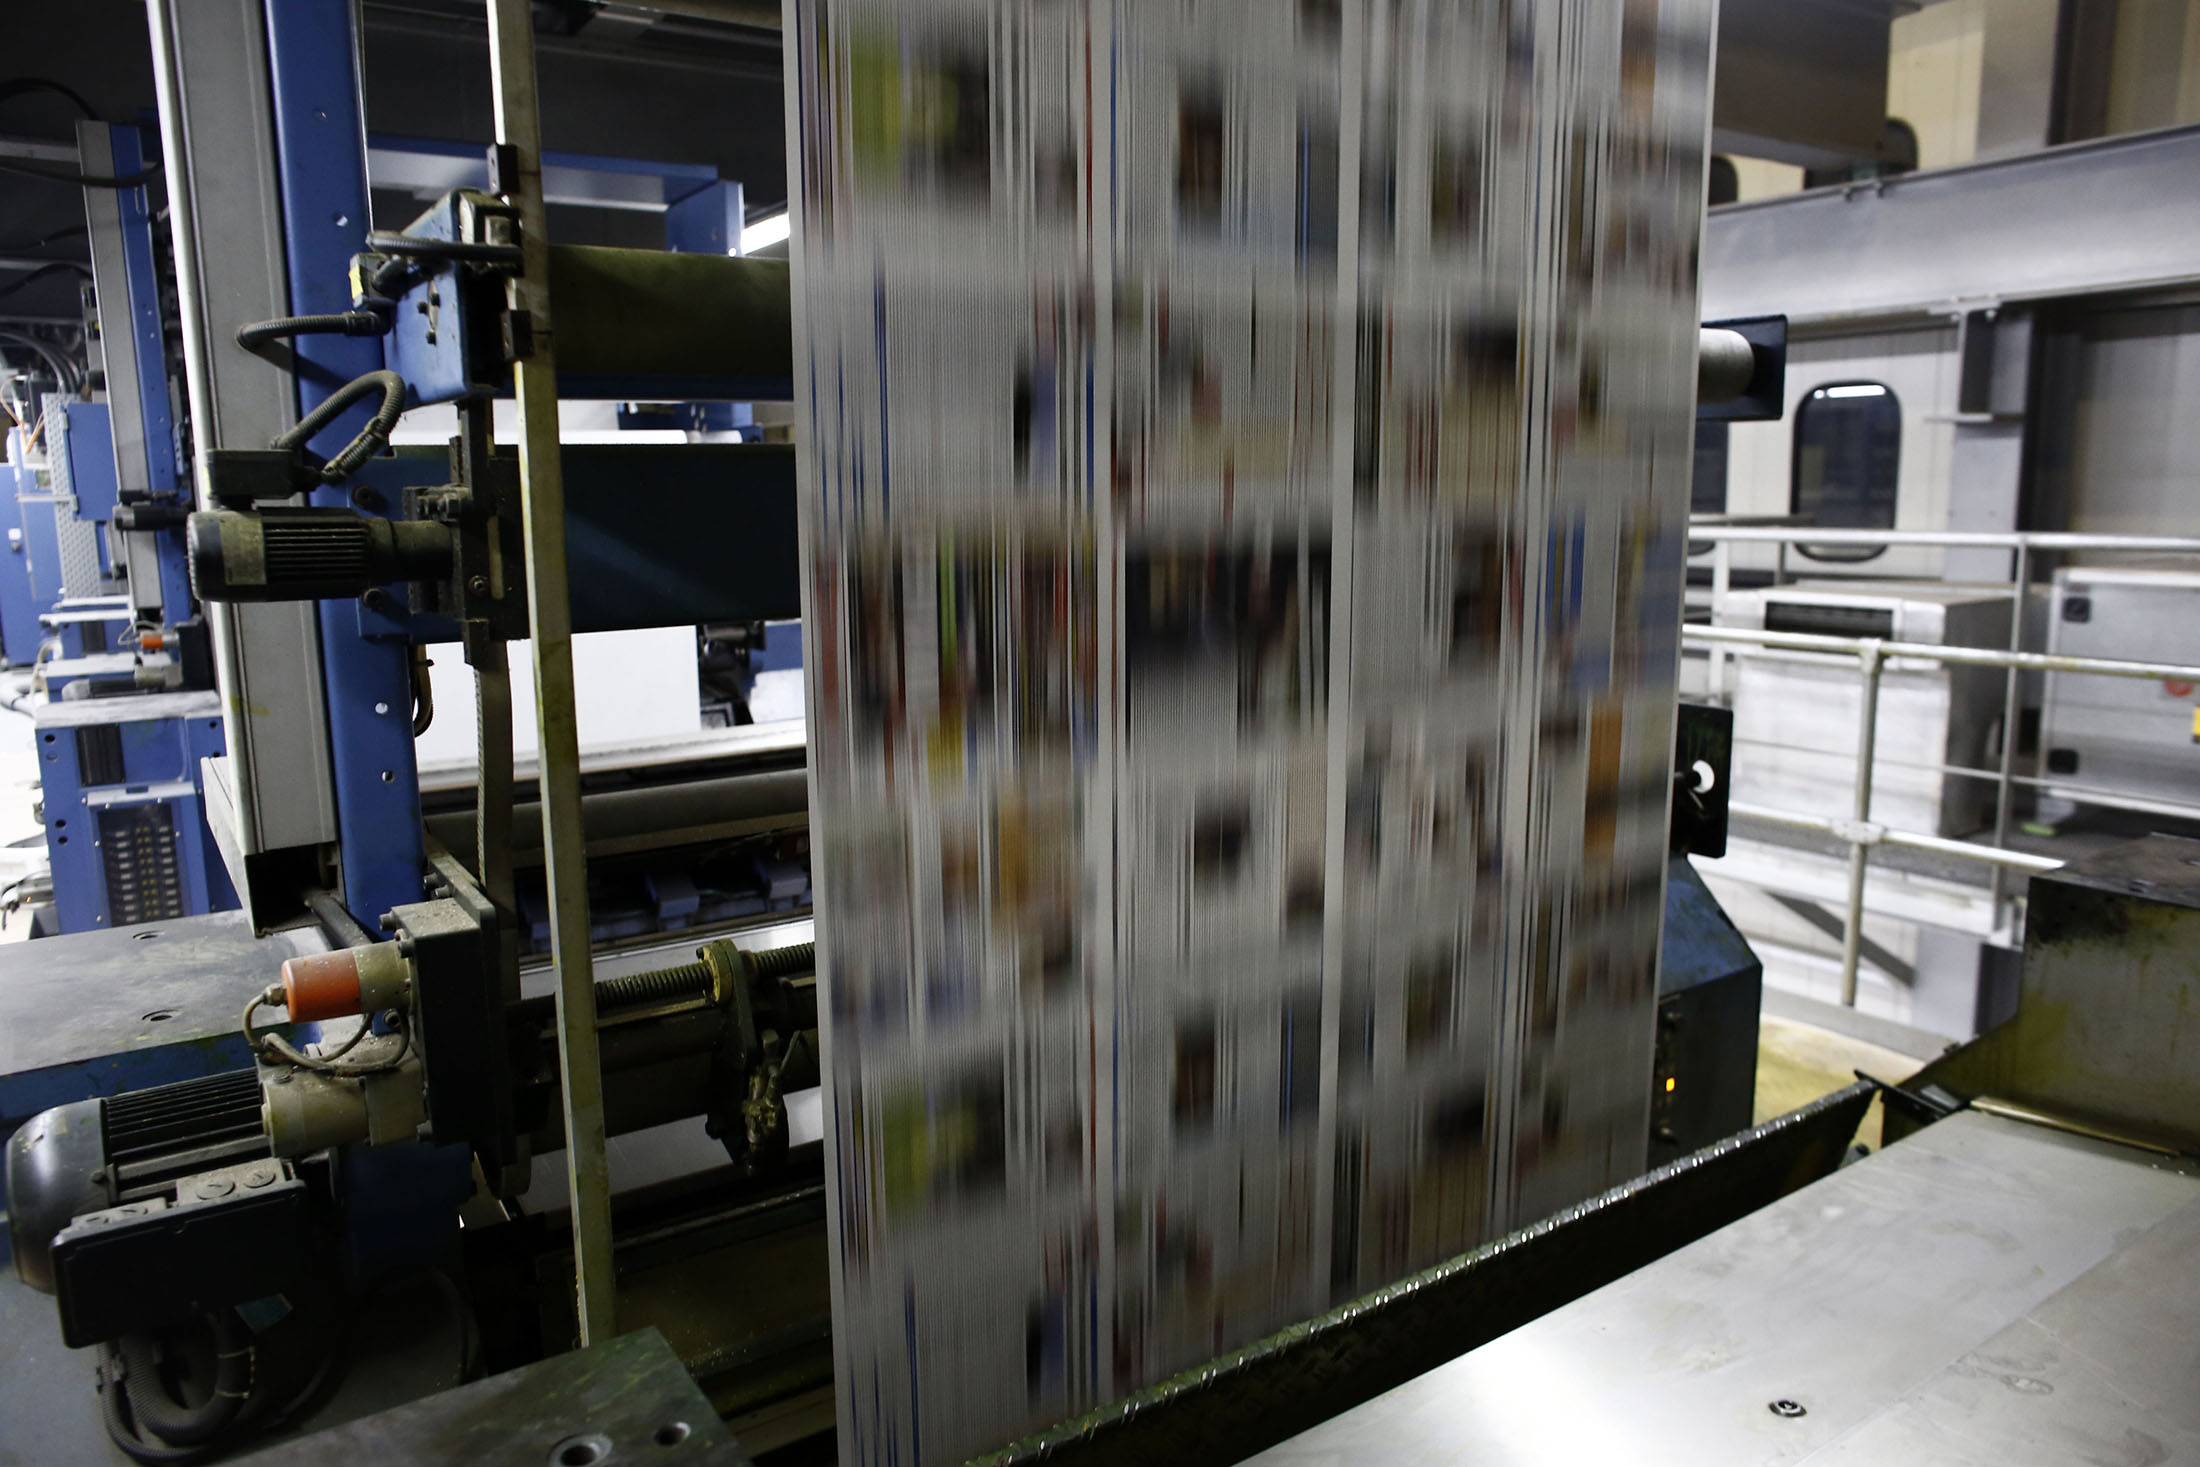 Warren Buffett Chooses New Path for Newspapers After Lamenting Decline